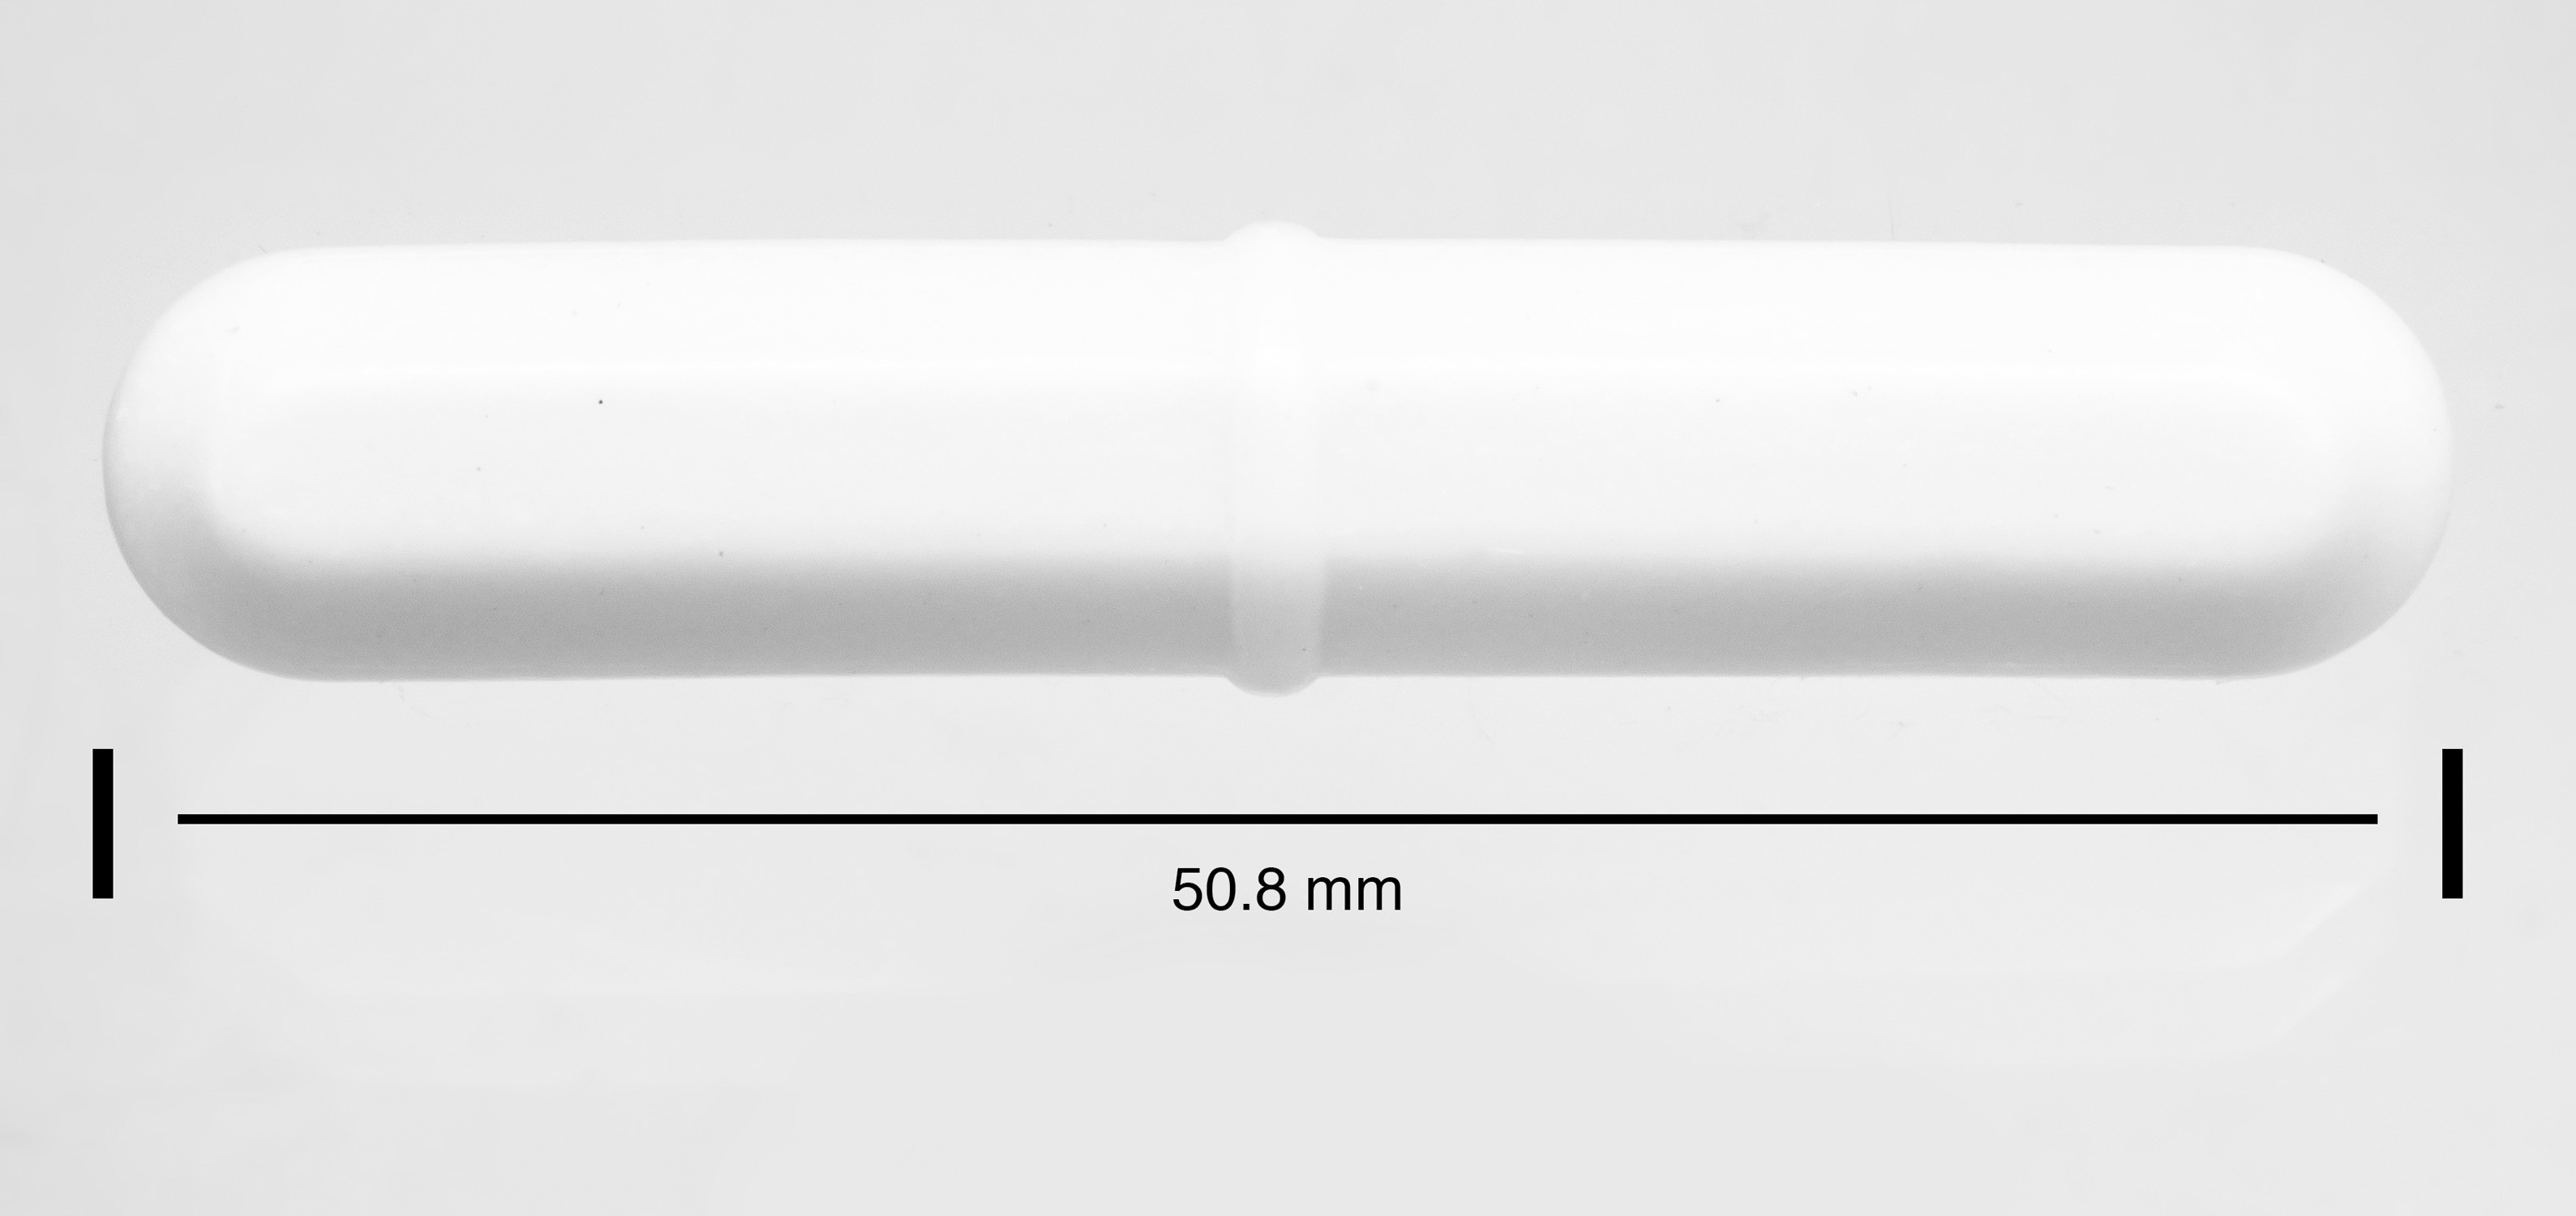 SP Bel-Art Spinbar Teflon Octagon Magnetic Stirring Bar; 50.8 x 9.5mm, White